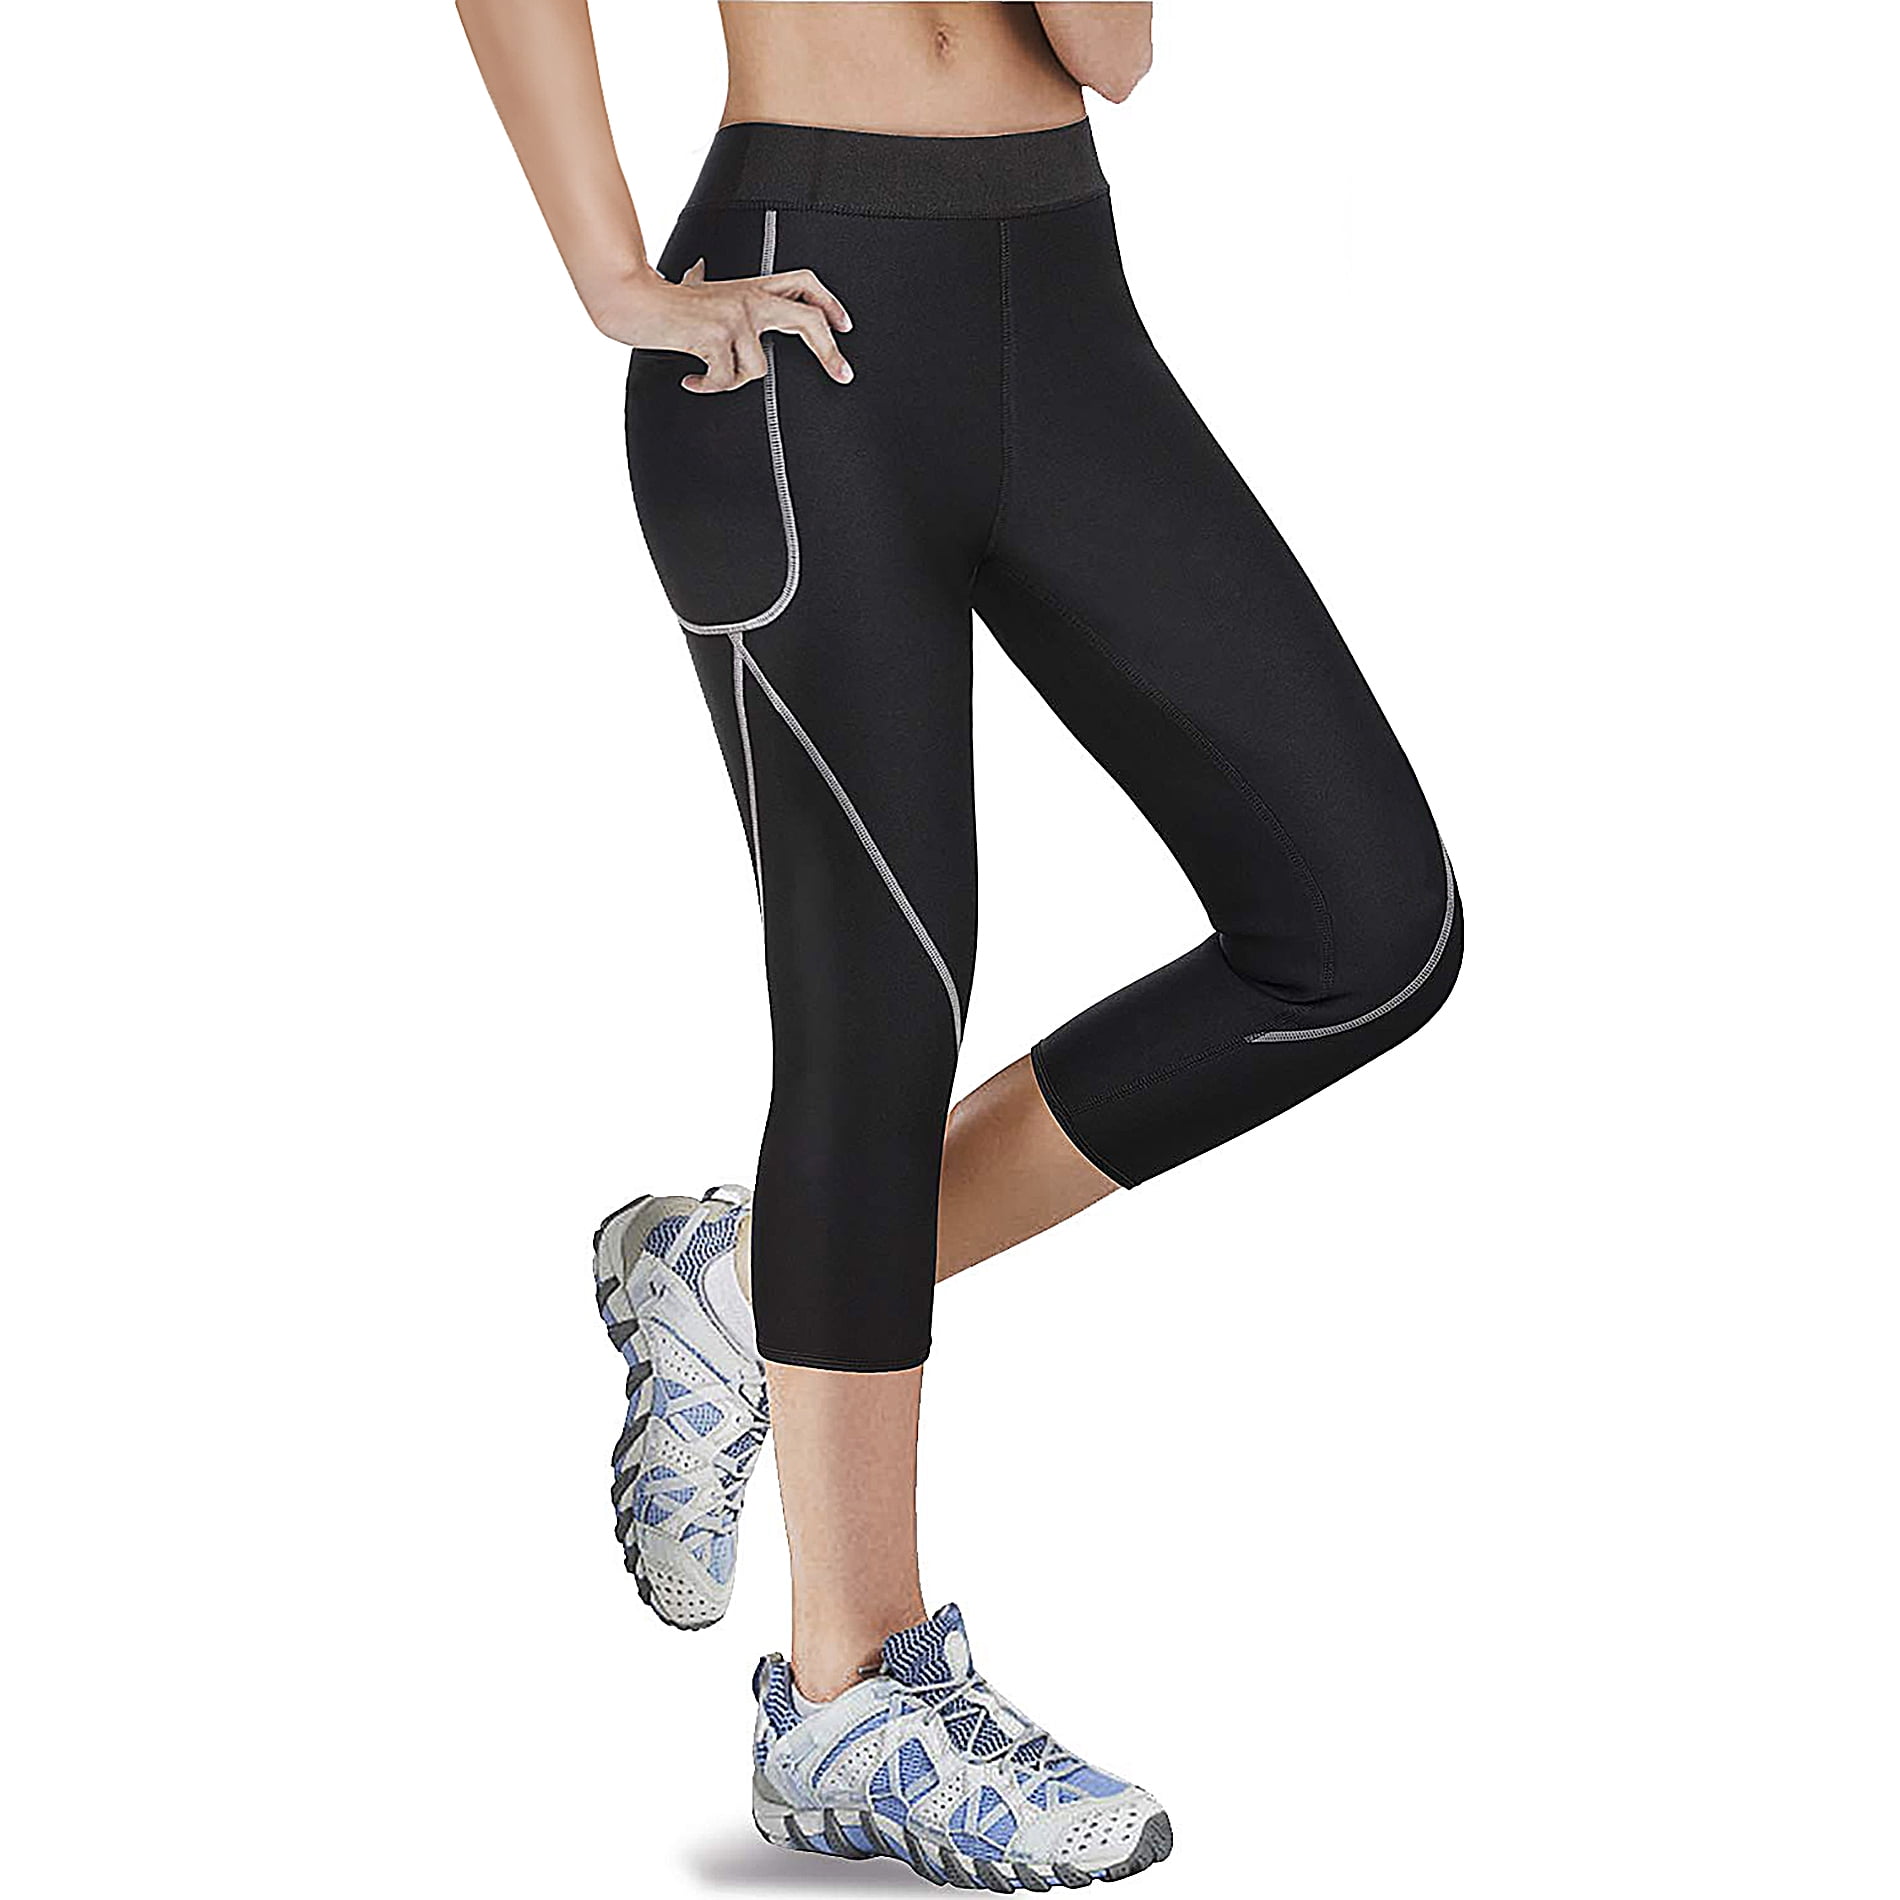 Women Sauna Fitness Workout Sweat Pant Fashion Design Slimming Neoprene Hot Body Shaper Leggings 